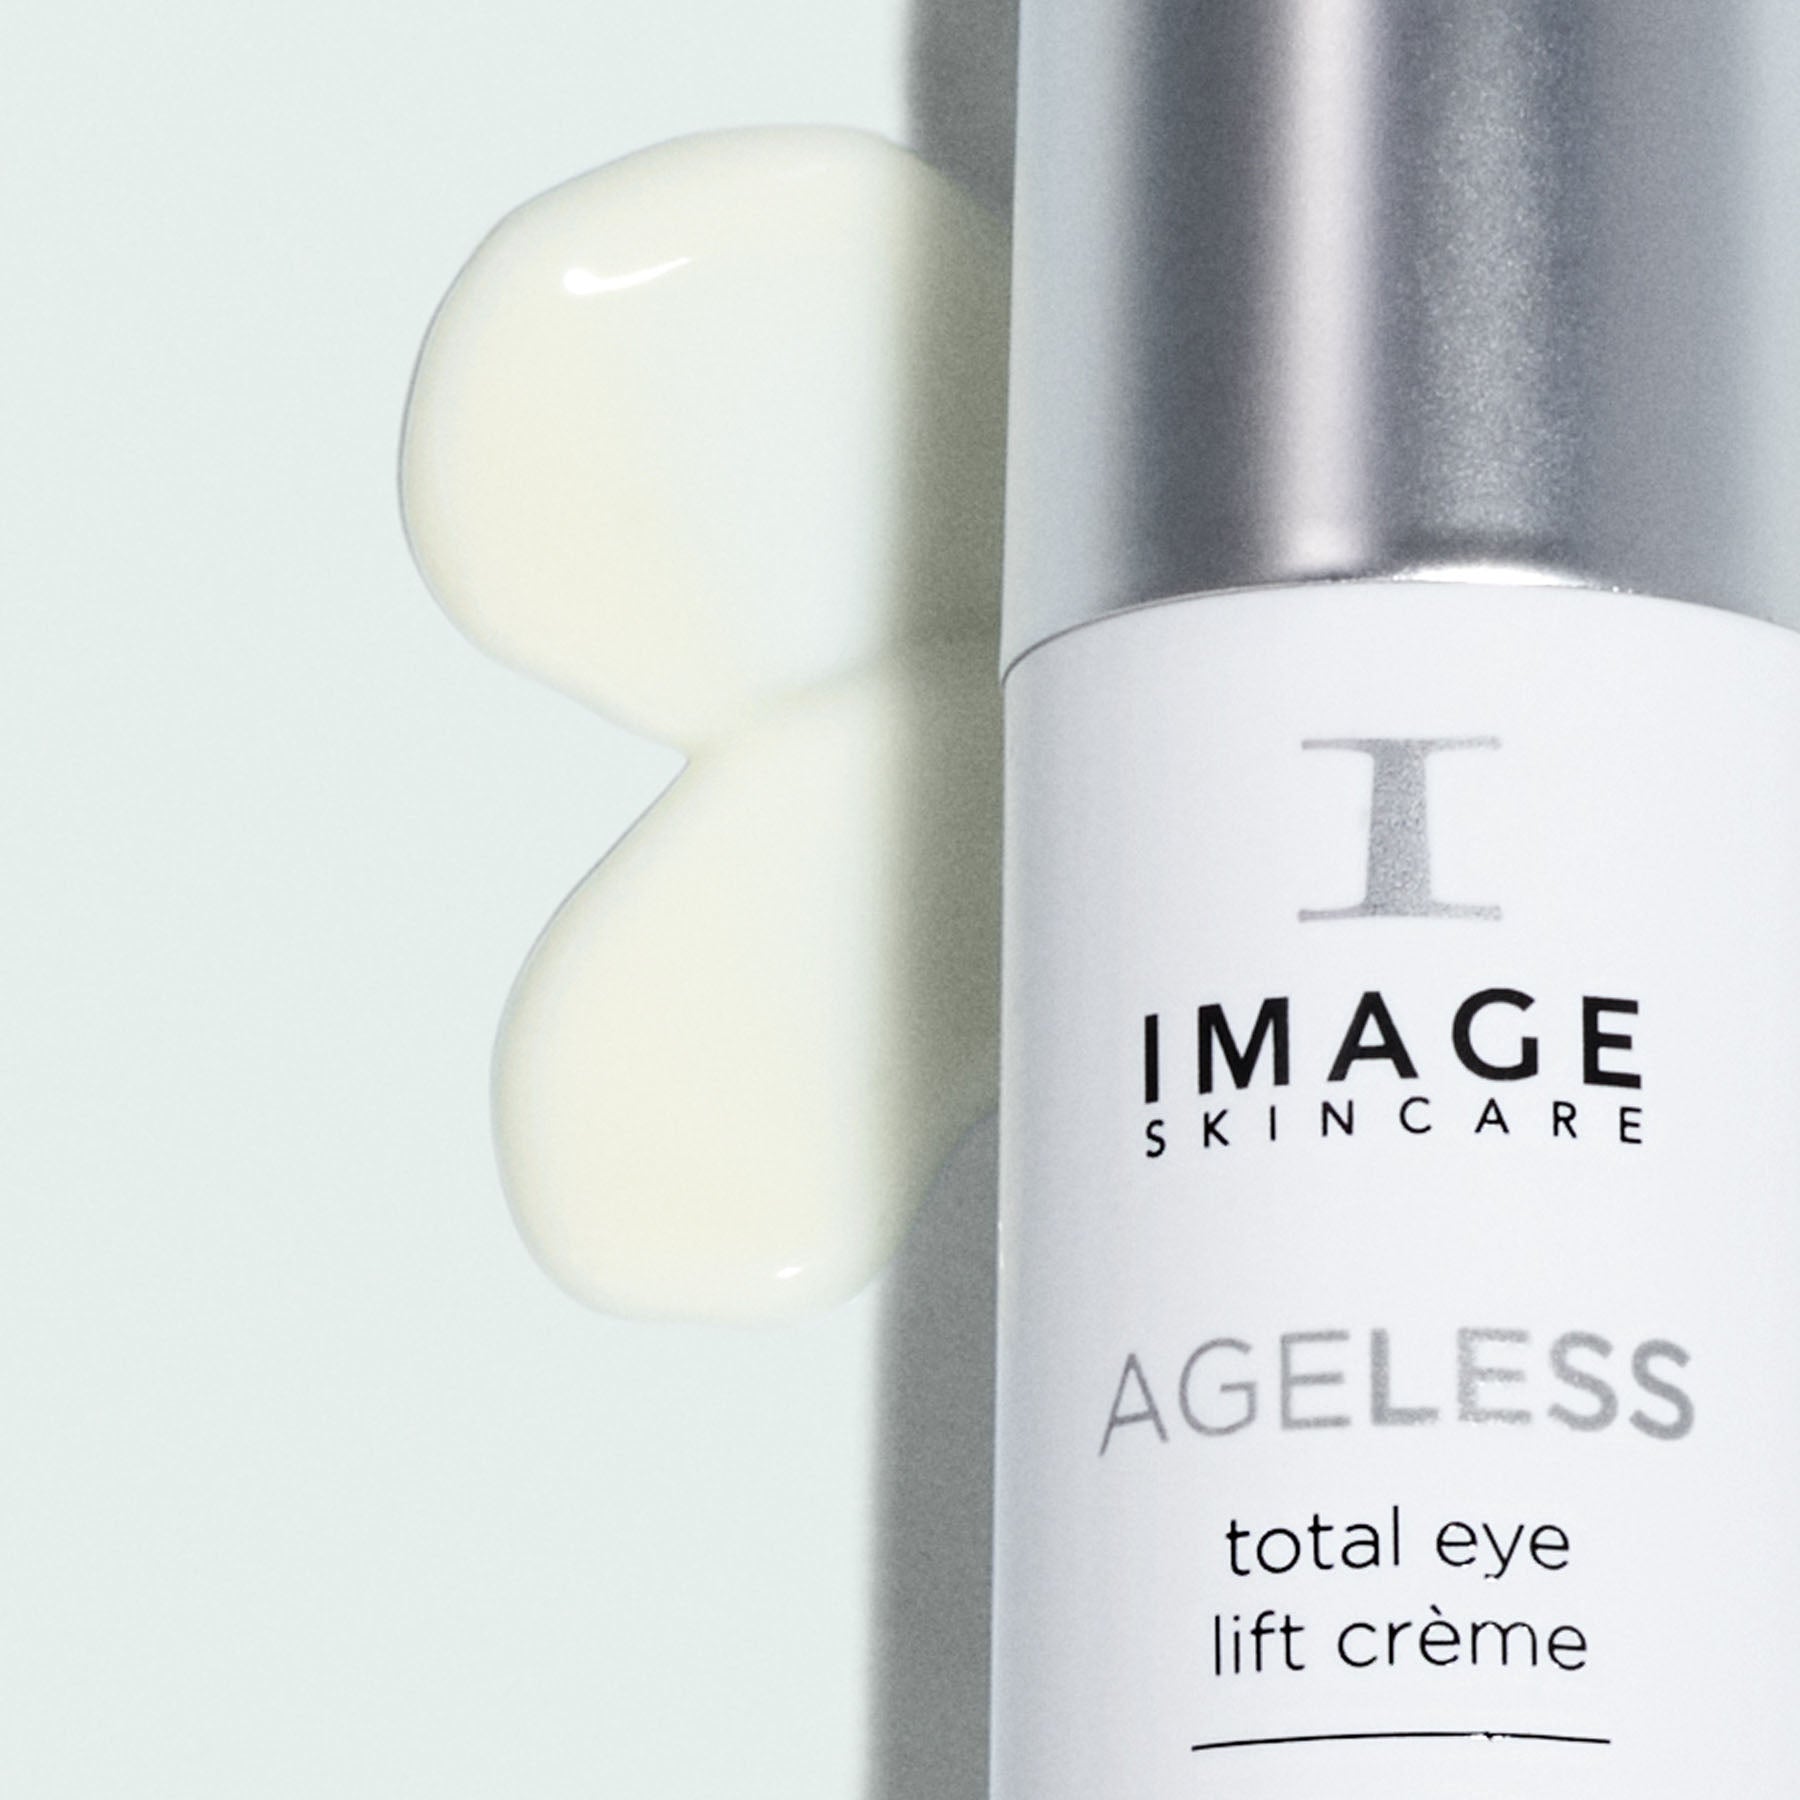 AGELESS total eye lift crème | IMAGE Skincare